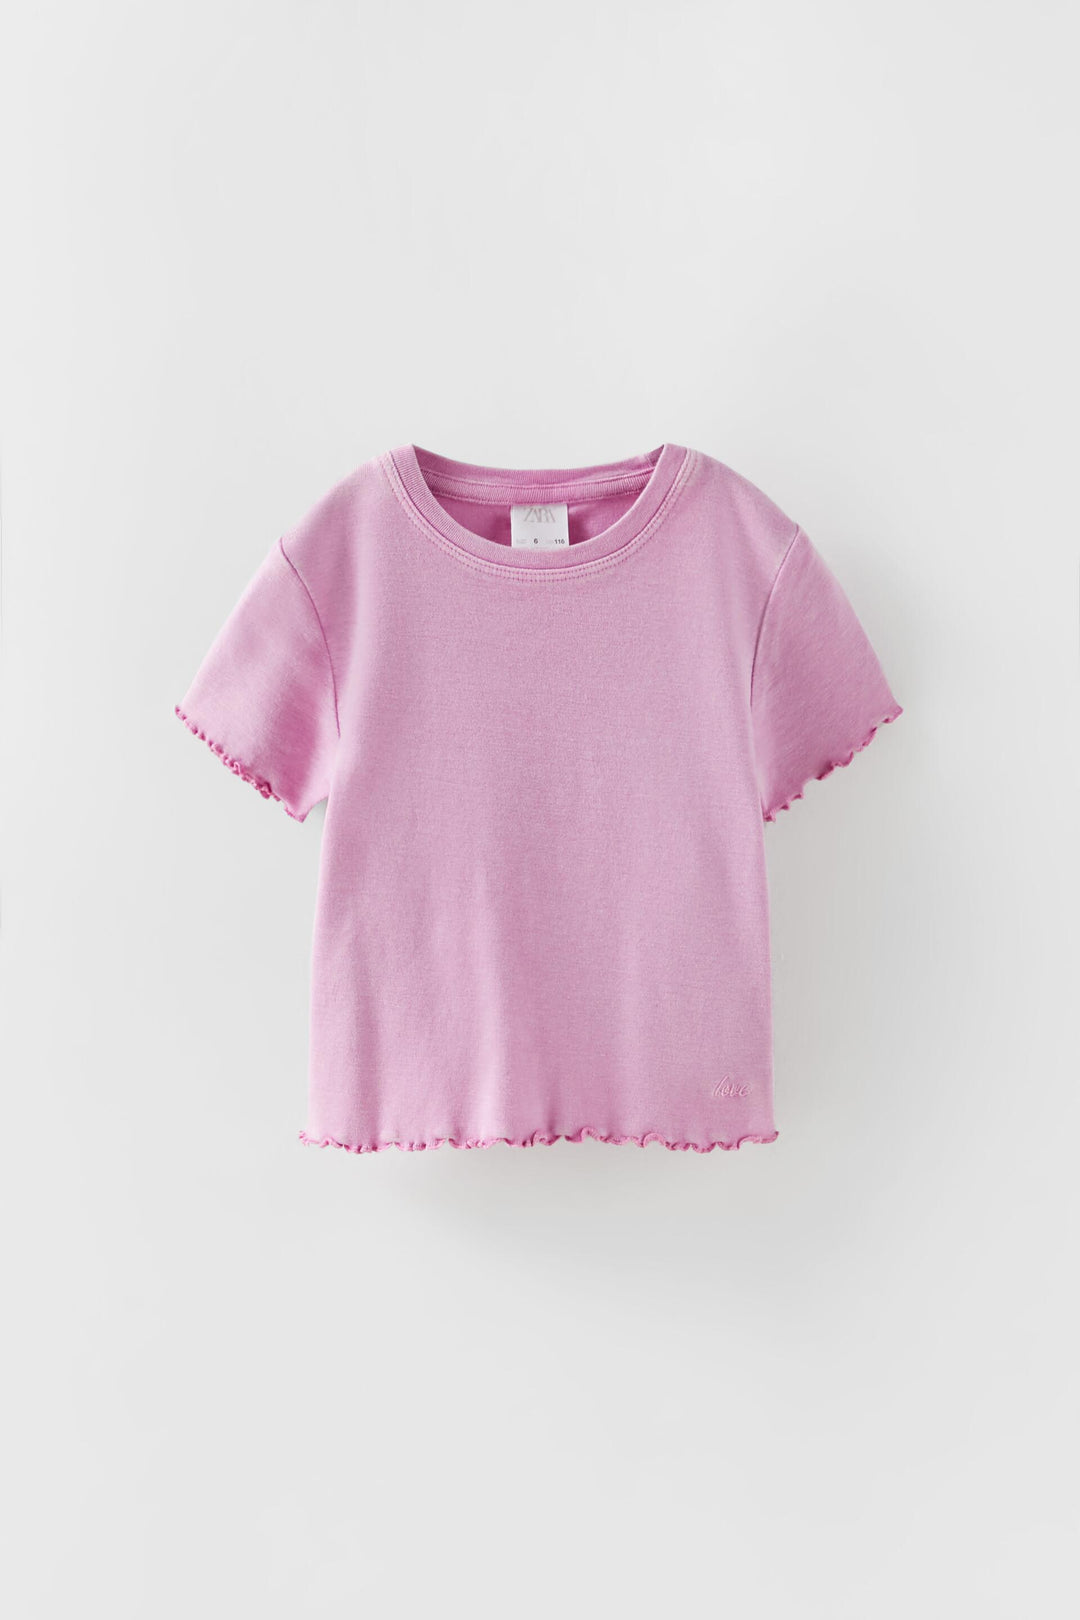 T-Shirt marque_Zara, genre_Fille, Enfant Moudda Tunisie1